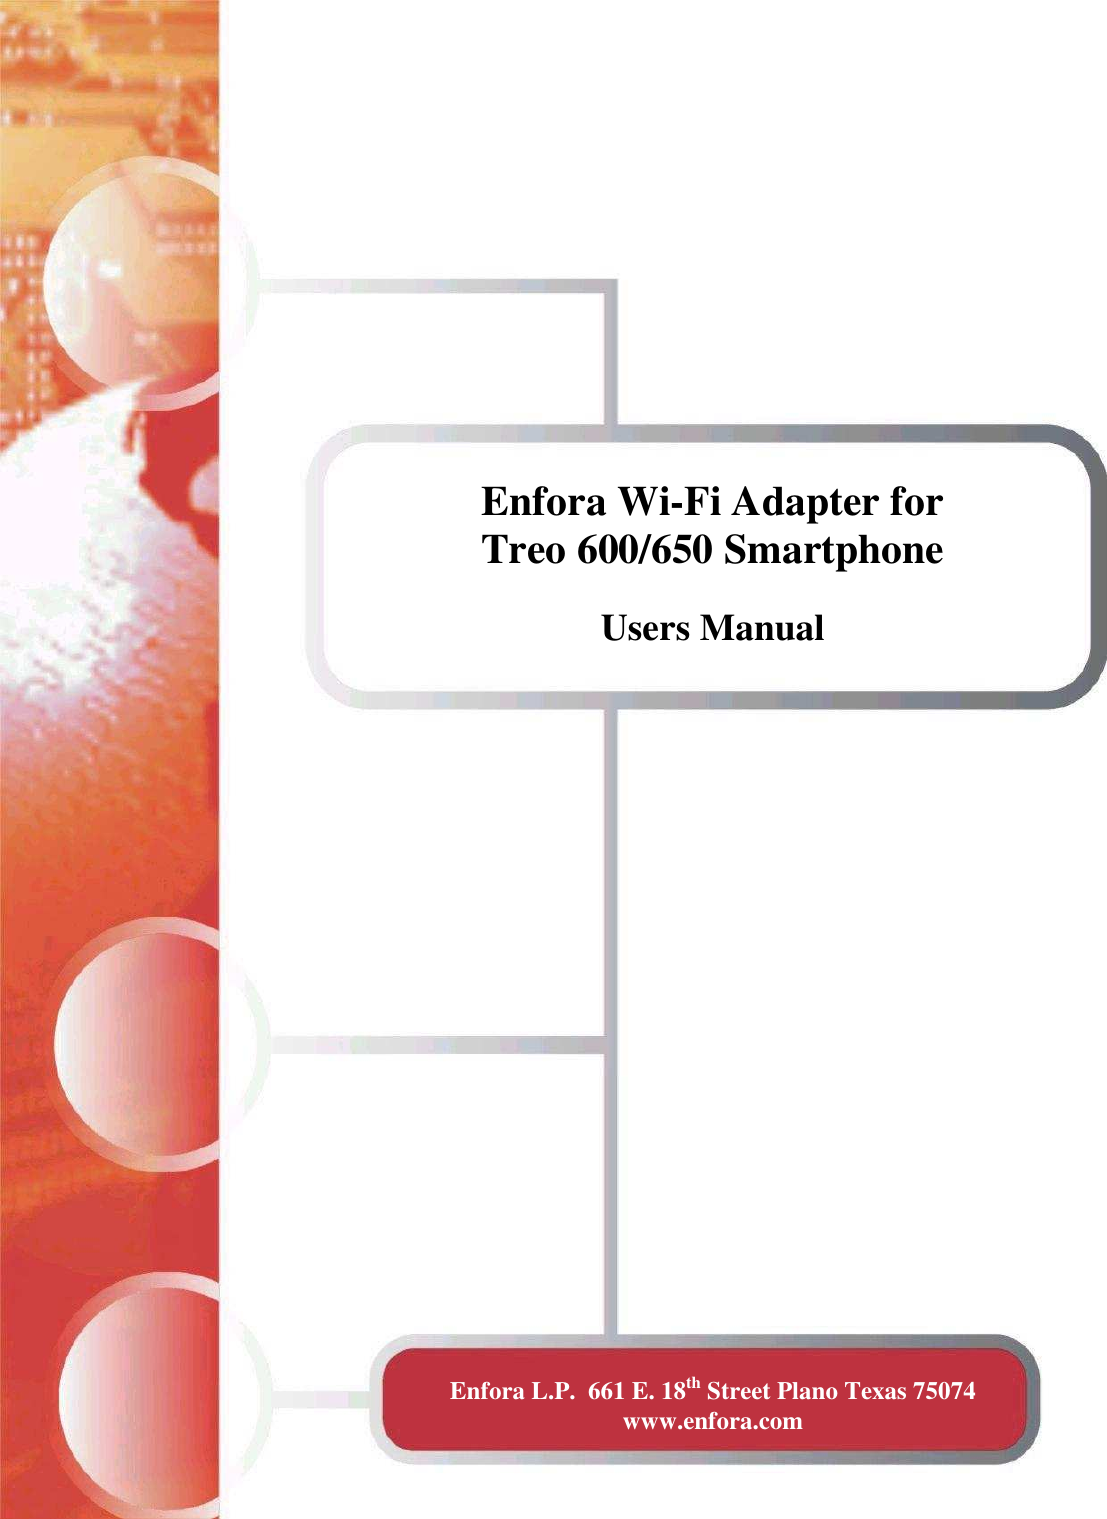    Enfora Wi-Fi Adapter for  Treo 600/650 Smartphone  Users Manual  Version 1.0 Enfora L.P.  661 E. 18th Street Plano Texas 75074   www.enfora.com 